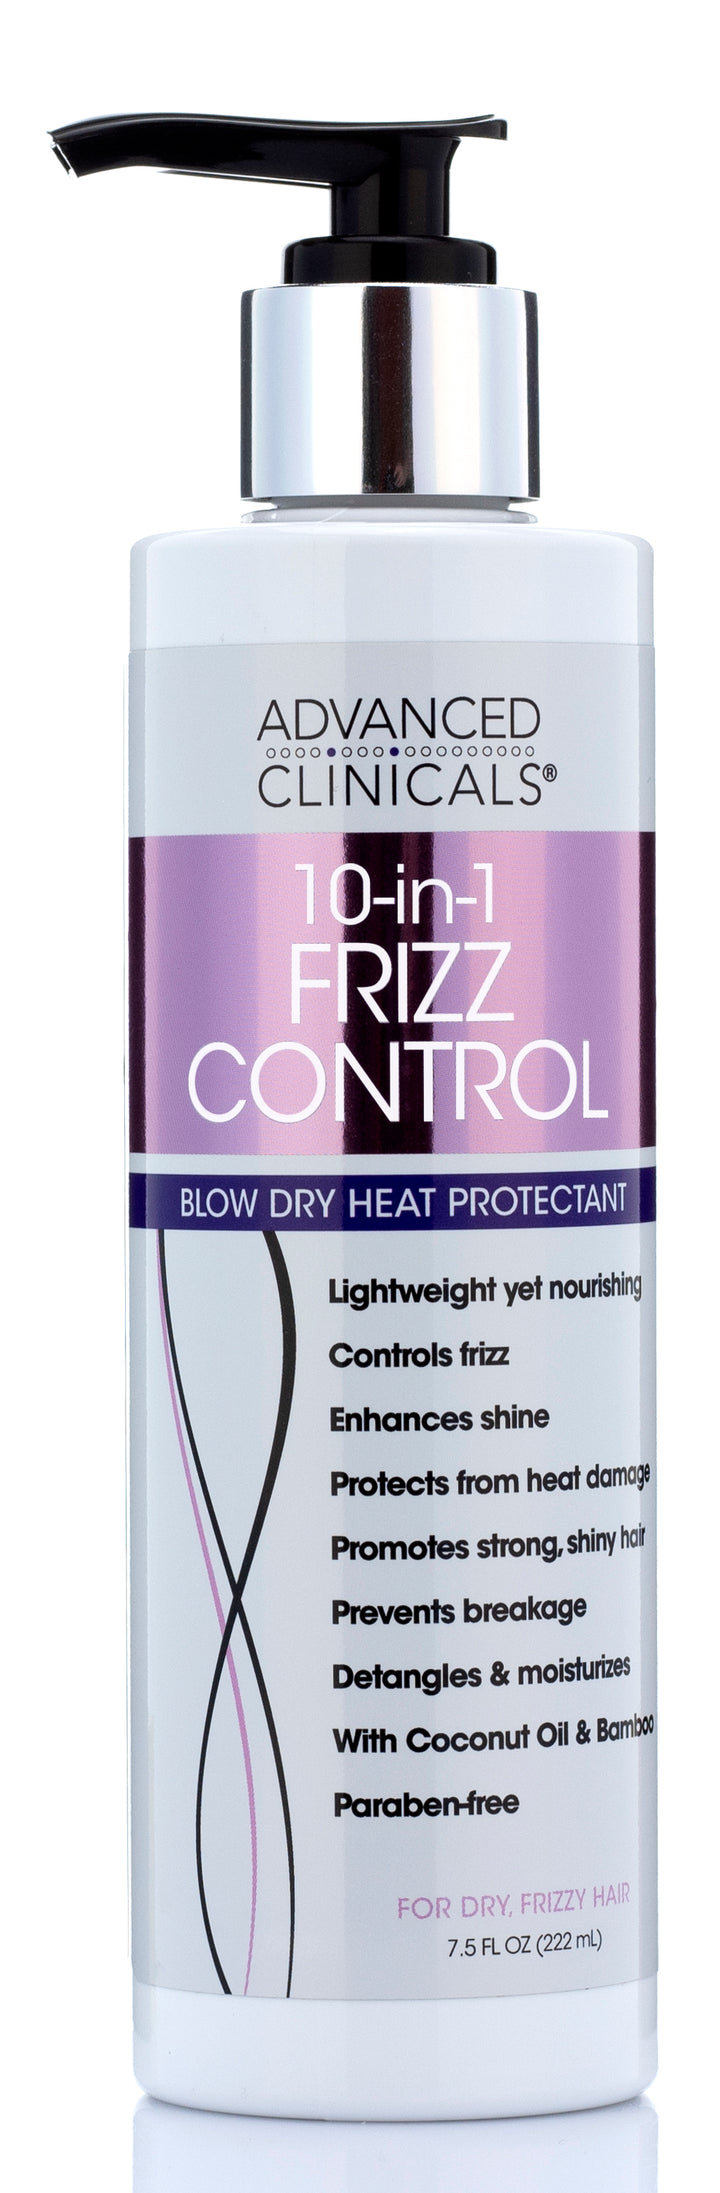 Advanced Clinicals 10 in 1 Frizz Control Hair Cream 7.5 Fl Oz - Pure Valley 